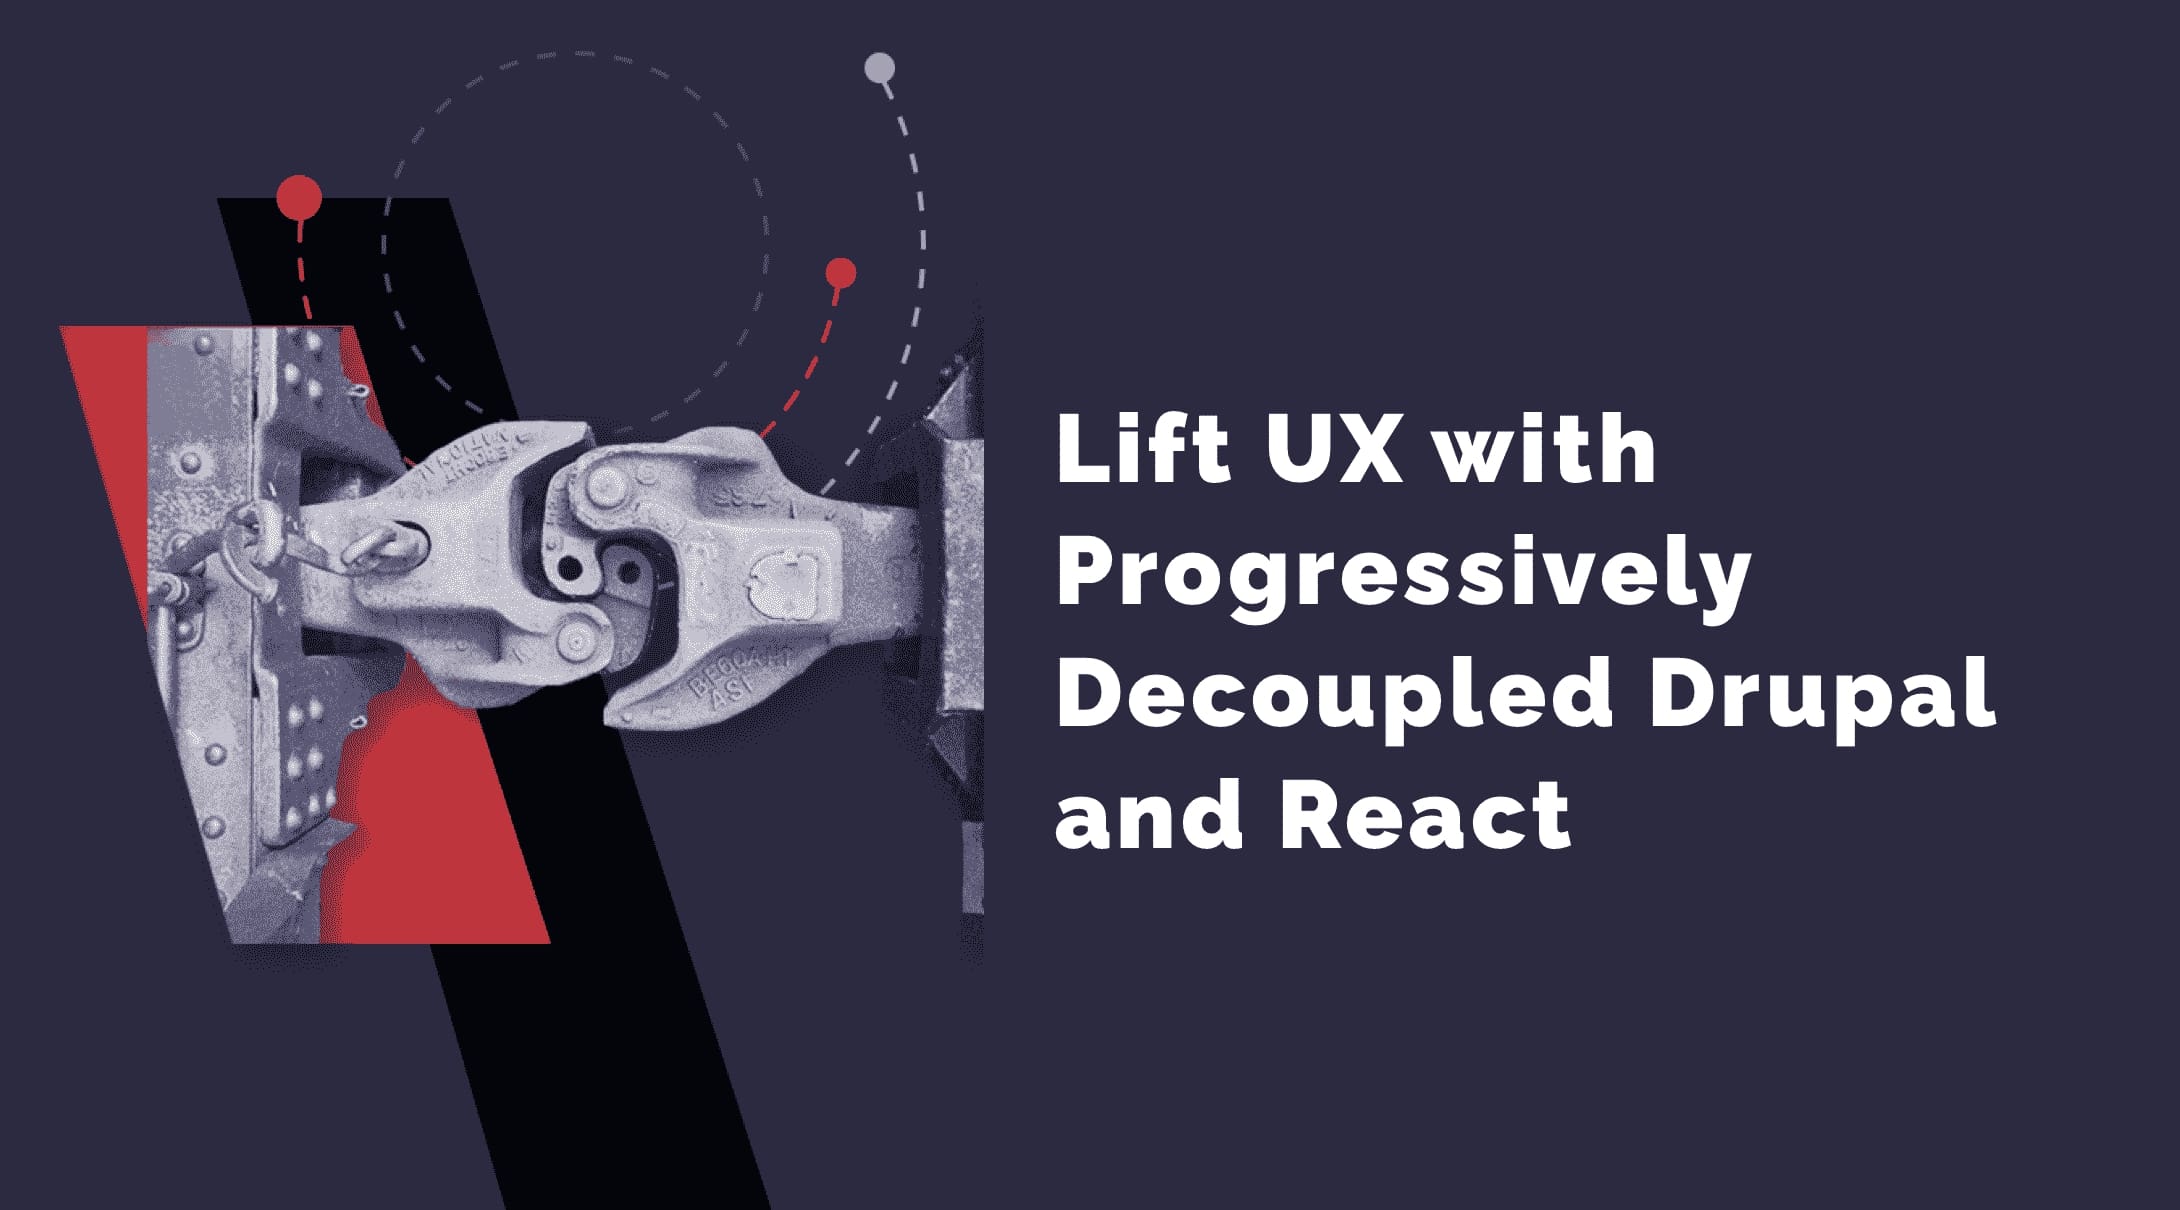 Lift UX with Progressively Decoupled Drupal & React